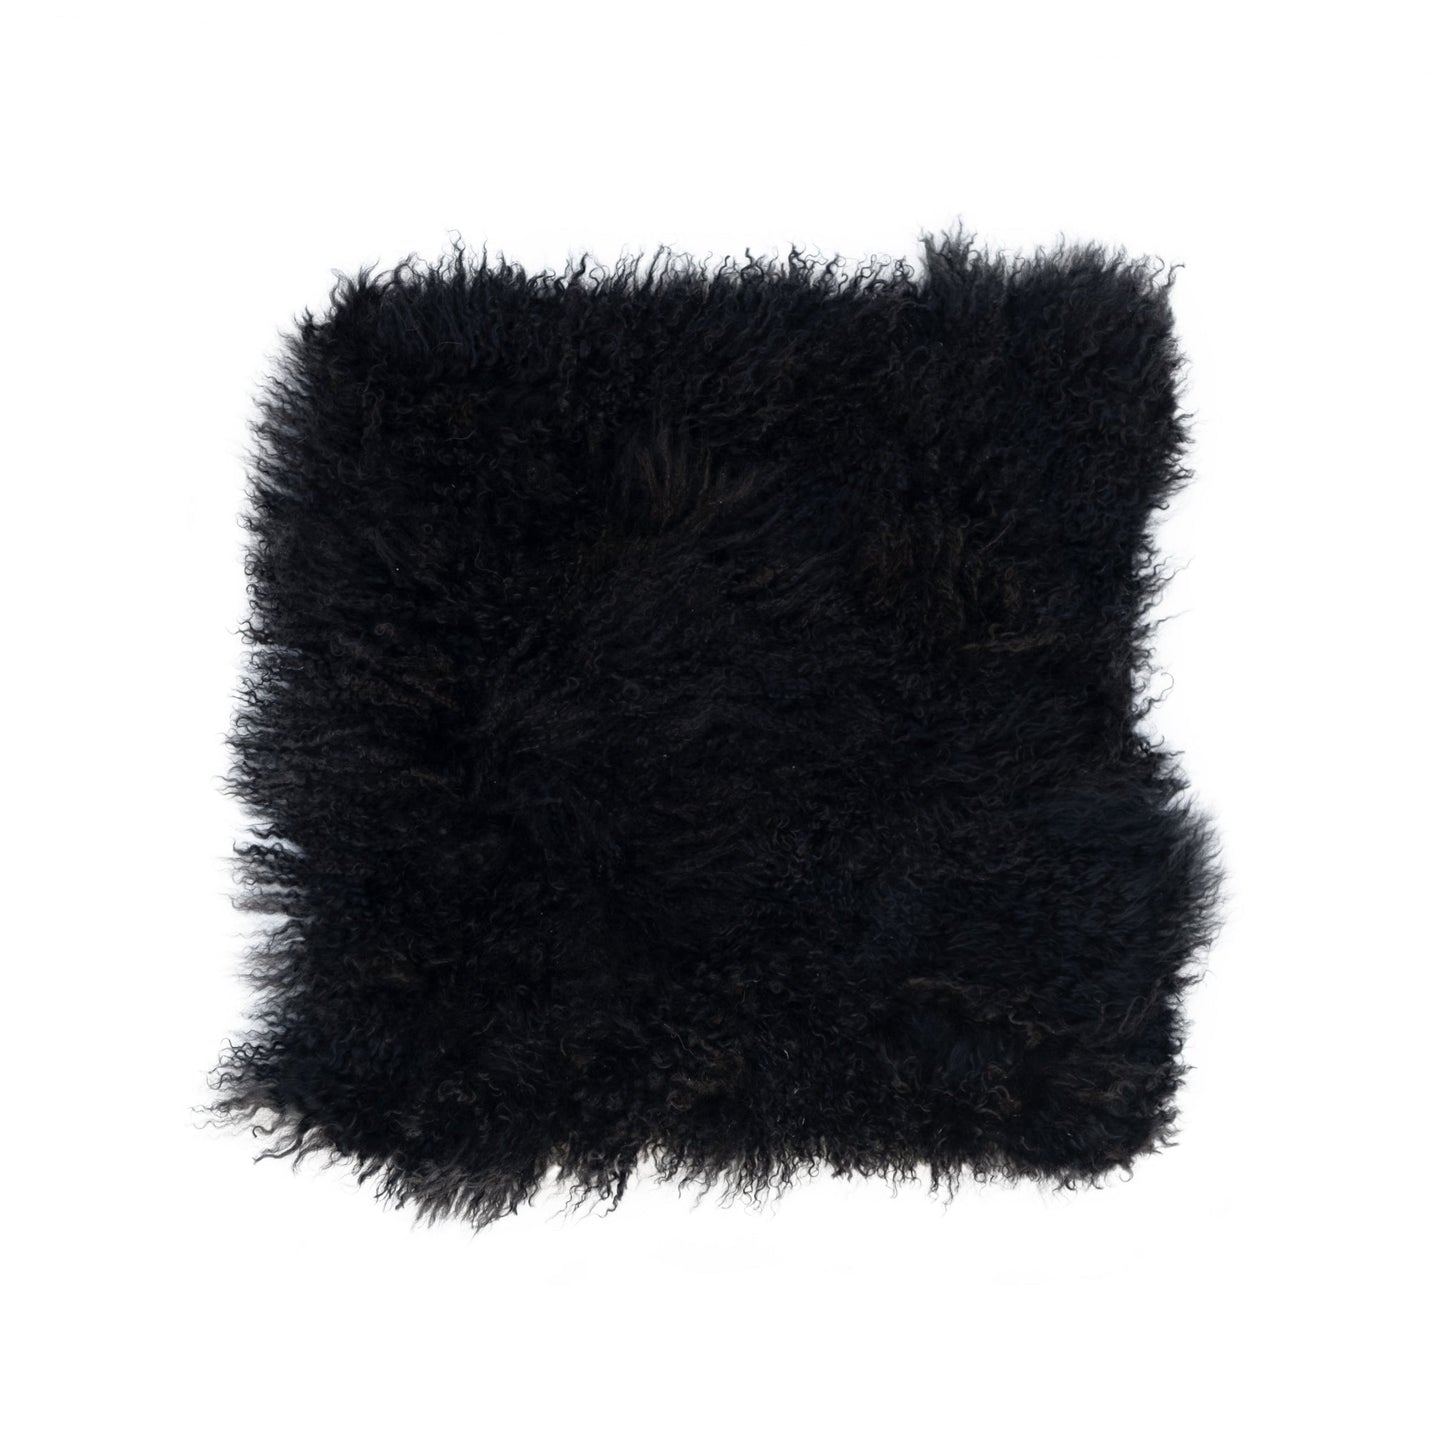 100% Natural Mongolian Sheepskin Cushion Covers - Medium